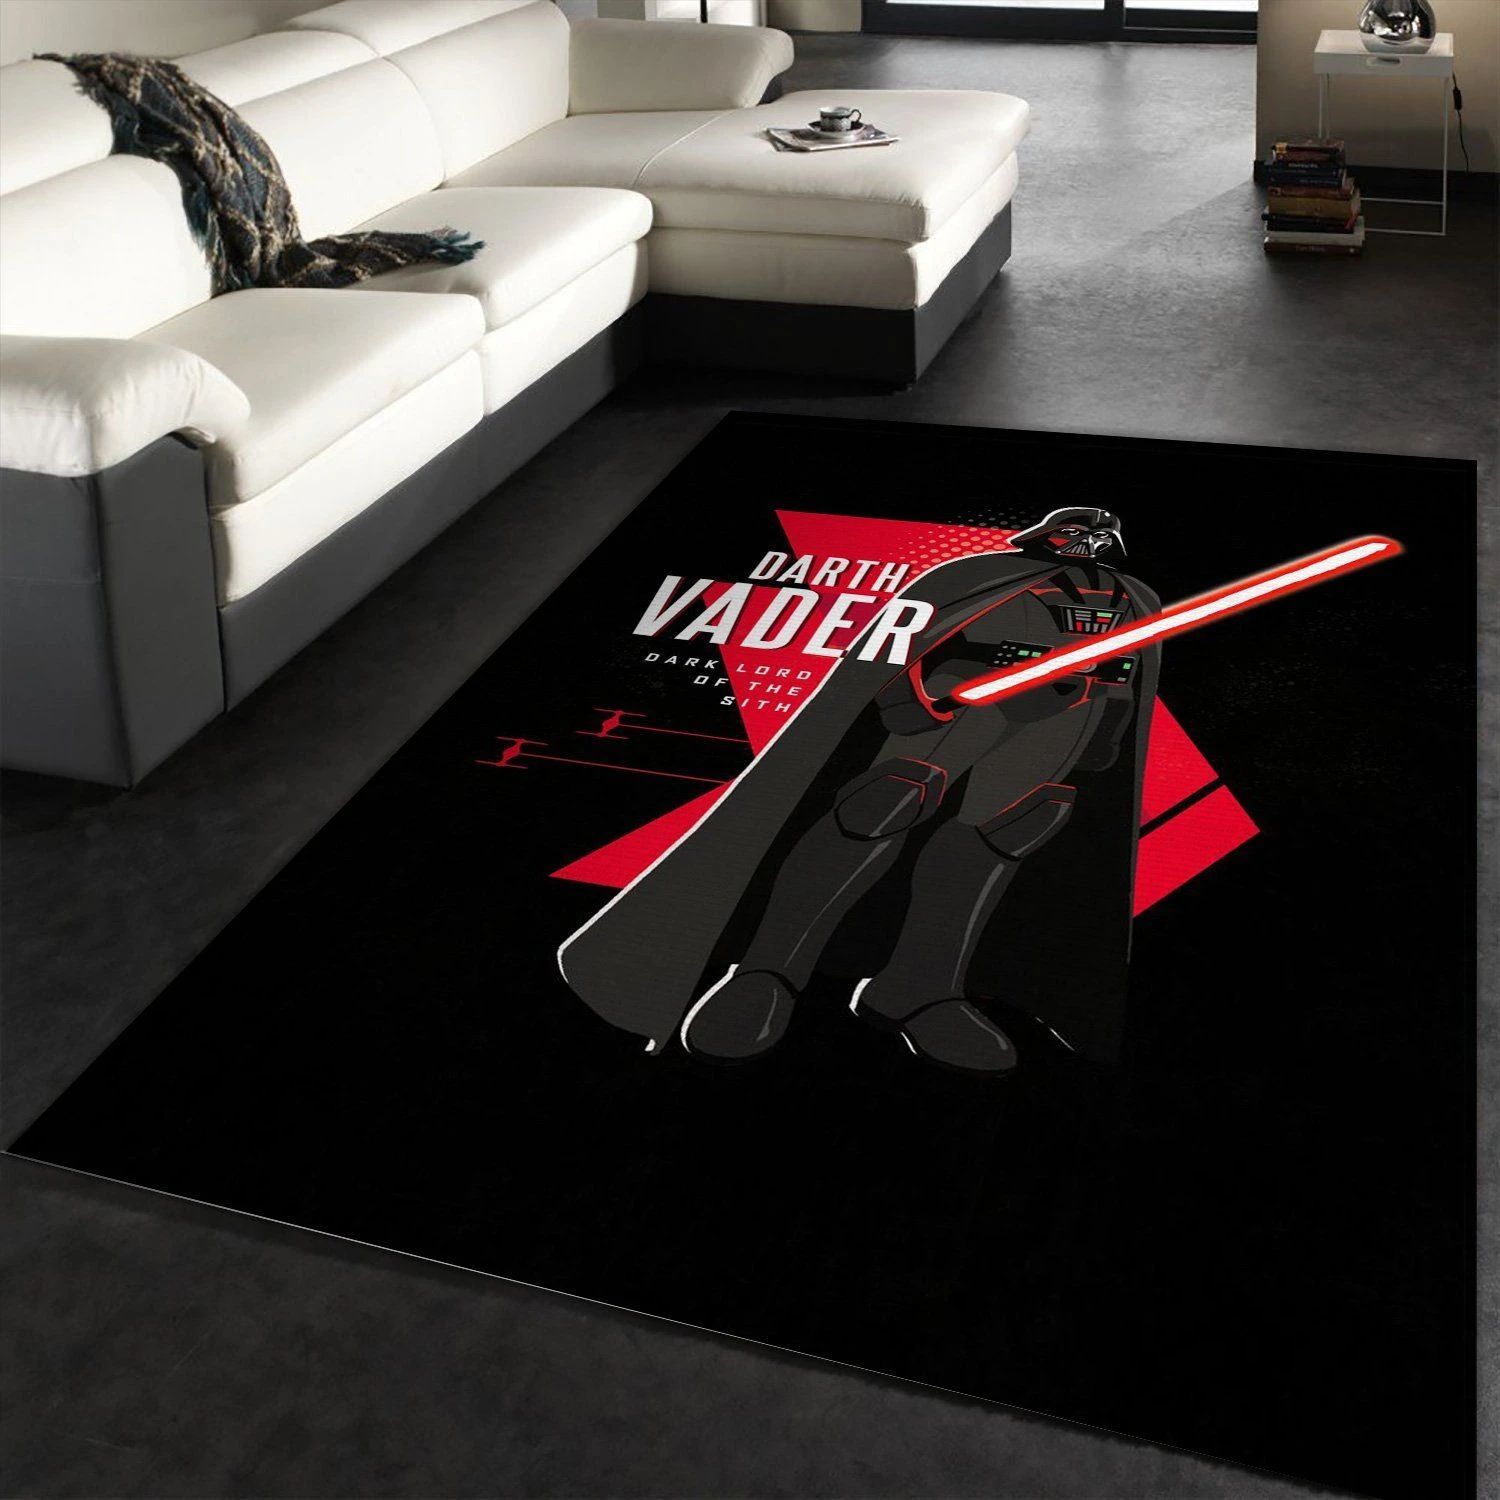 Vader Rug Star Wars Galaxy Of Adventures Home US Decor - Indoor Outdoor Rugs